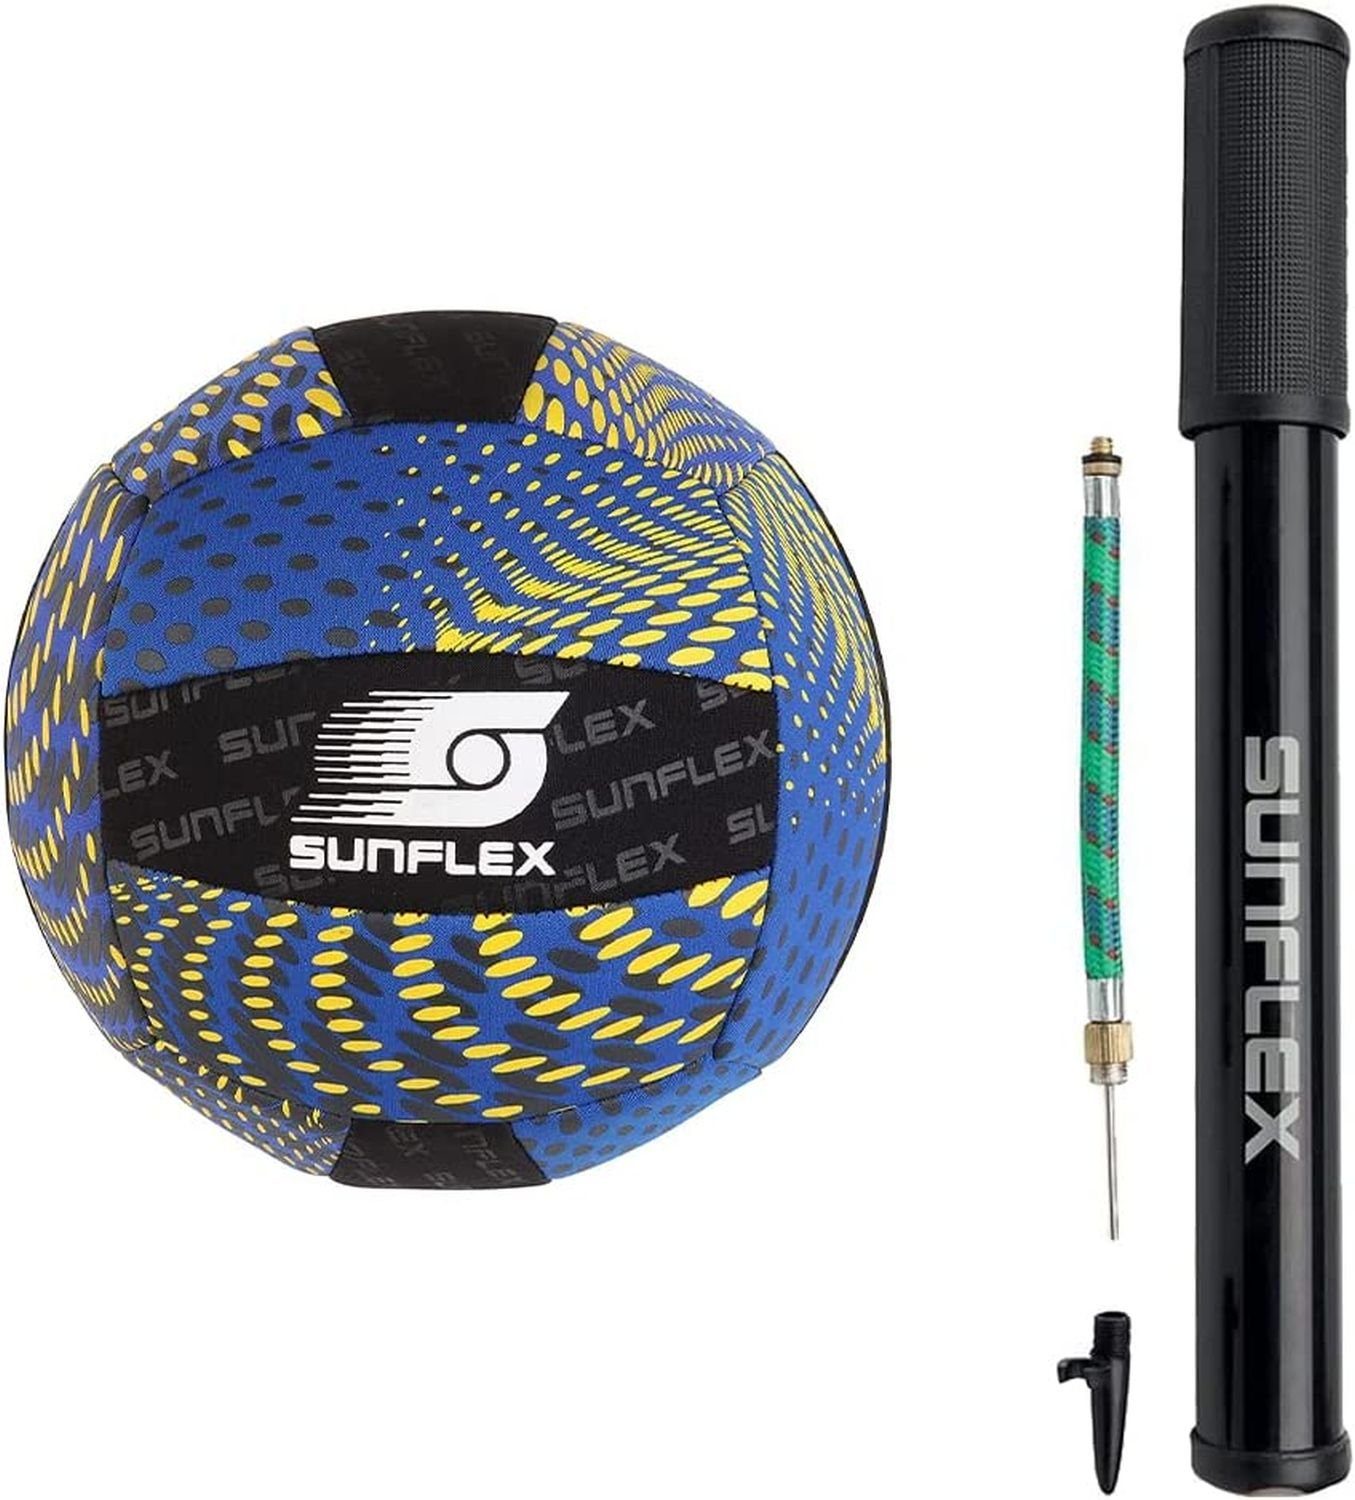 Sunflex Beachvolleyball Ball 5 Pumpe Splash blau inkl. Größe